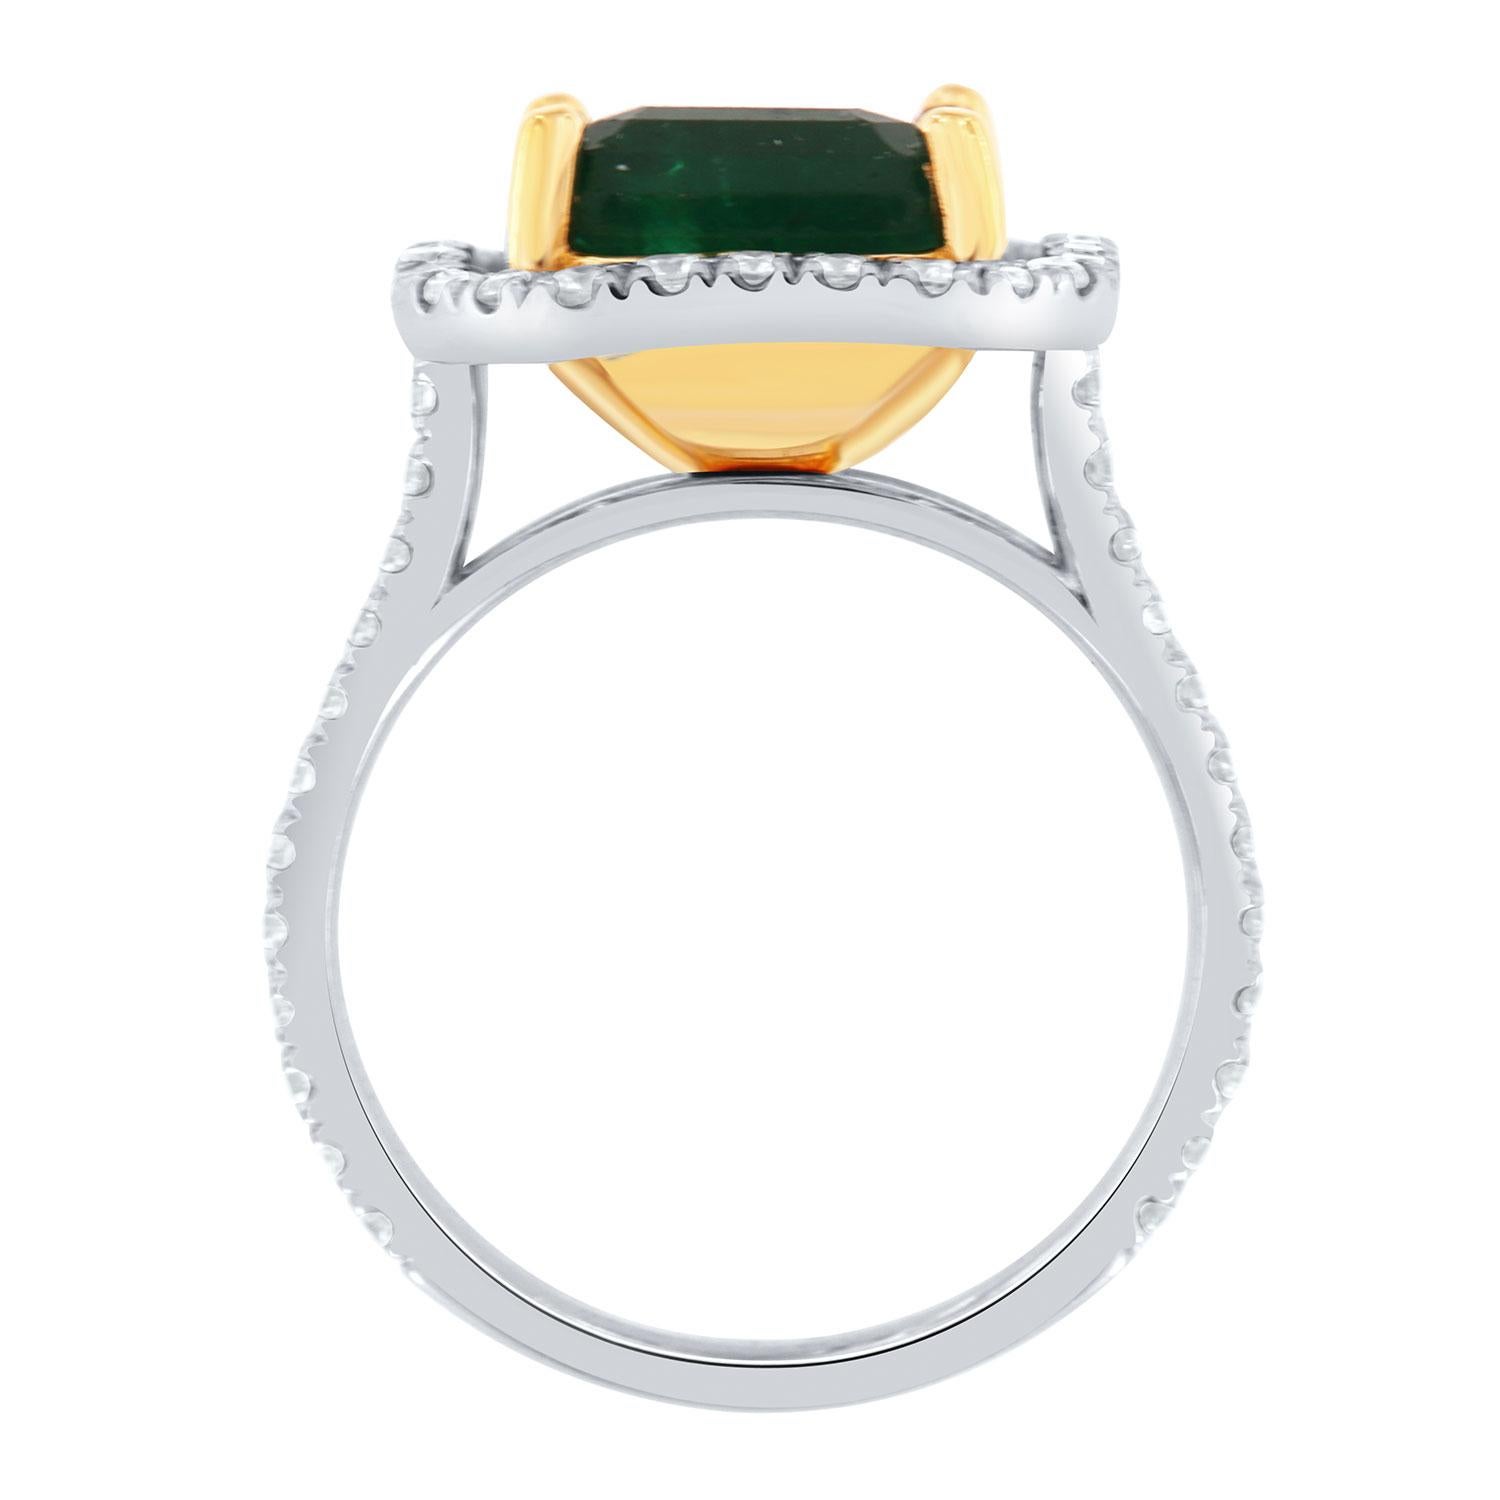 Emerald Cut 18K White & Yellow Gold GIA Certified 6.23 Carat Green Emerald Halo Diamond Ring For Sale